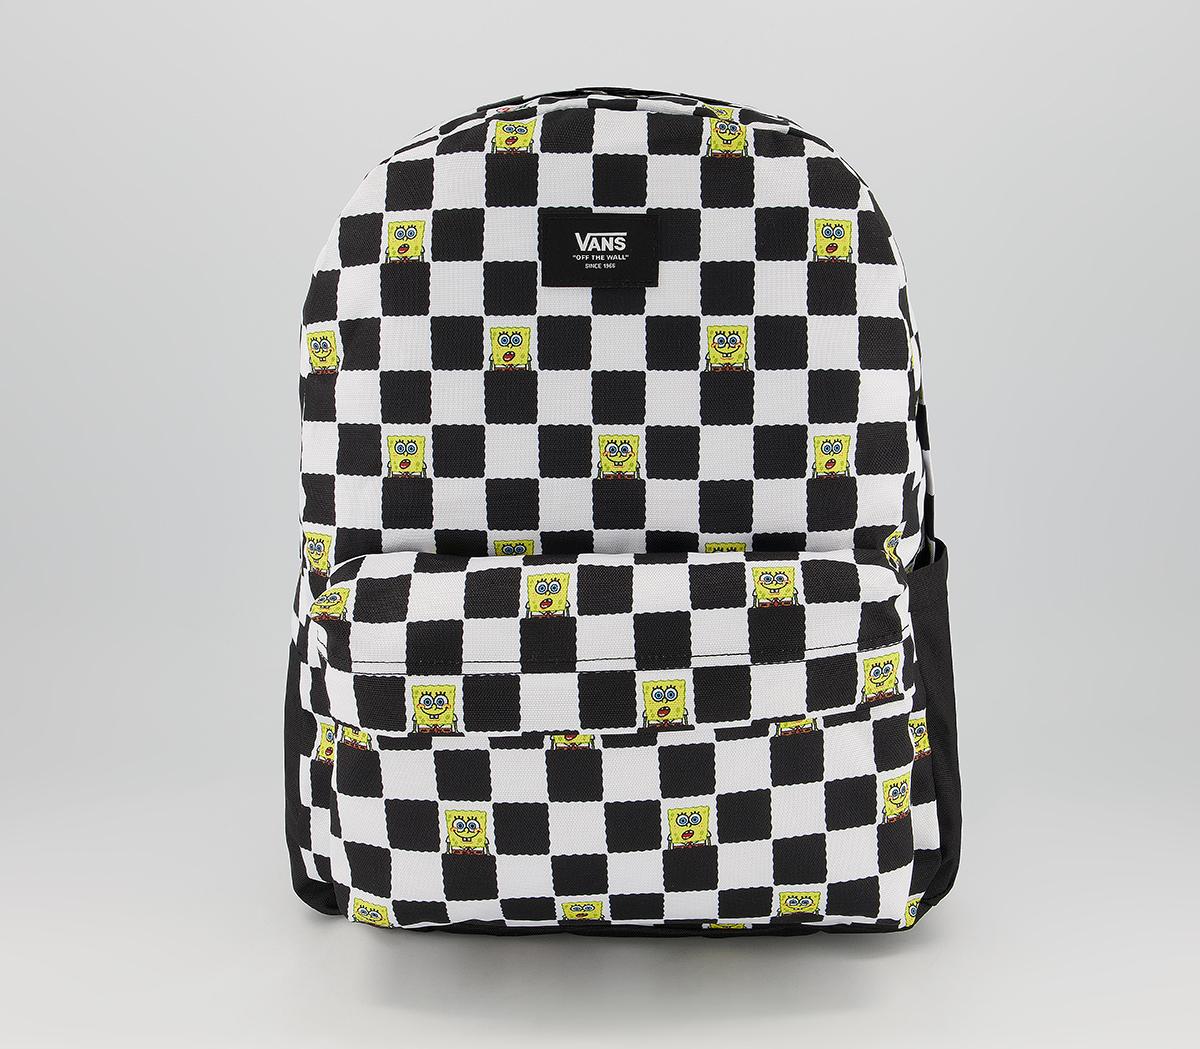 VansOld Skool III BackpackSpongebob Checkerboard